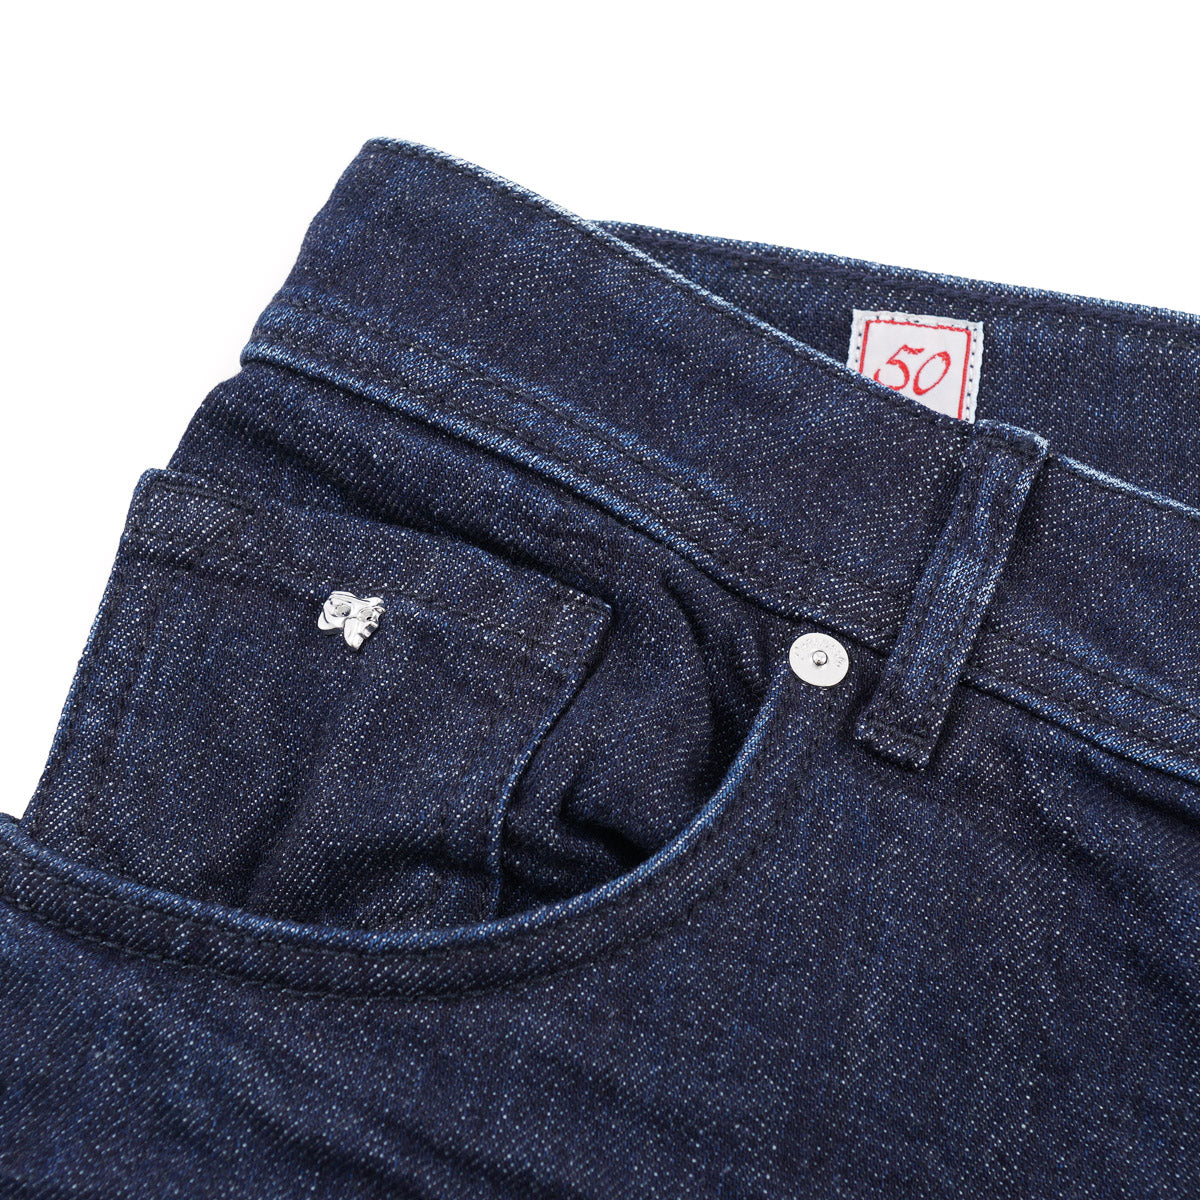 Levi's Authentic Denim Jeans Pallet - Mixed Assortment, 200pcs for  Retailers - United States, New - The wholesale platform | Merkandi B2B